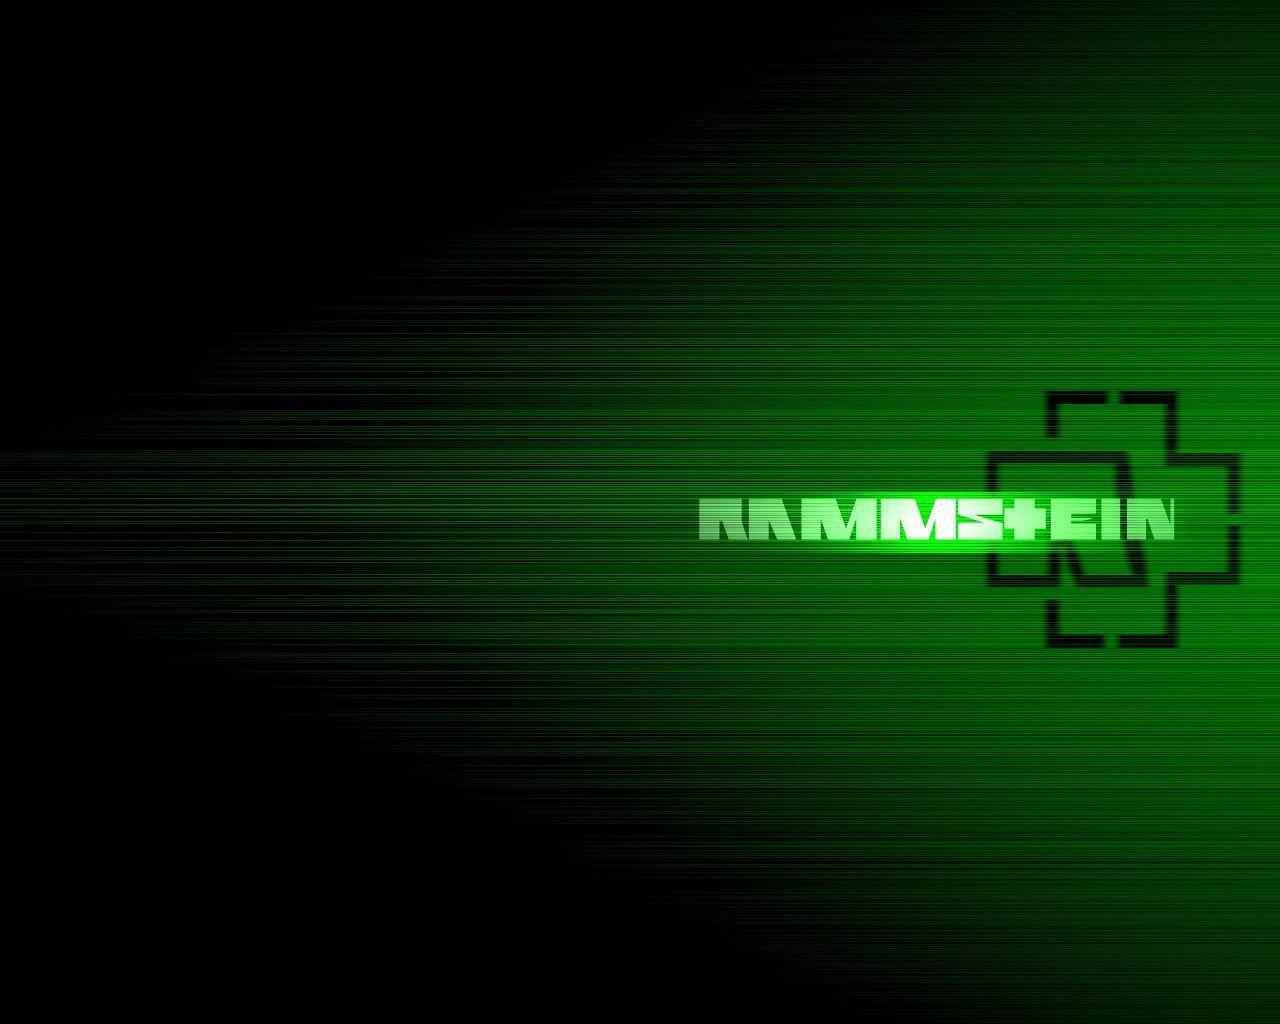 Rammstein Computer Wallpapers, Desktop Backgrounds 1280x1024 Id: 5082